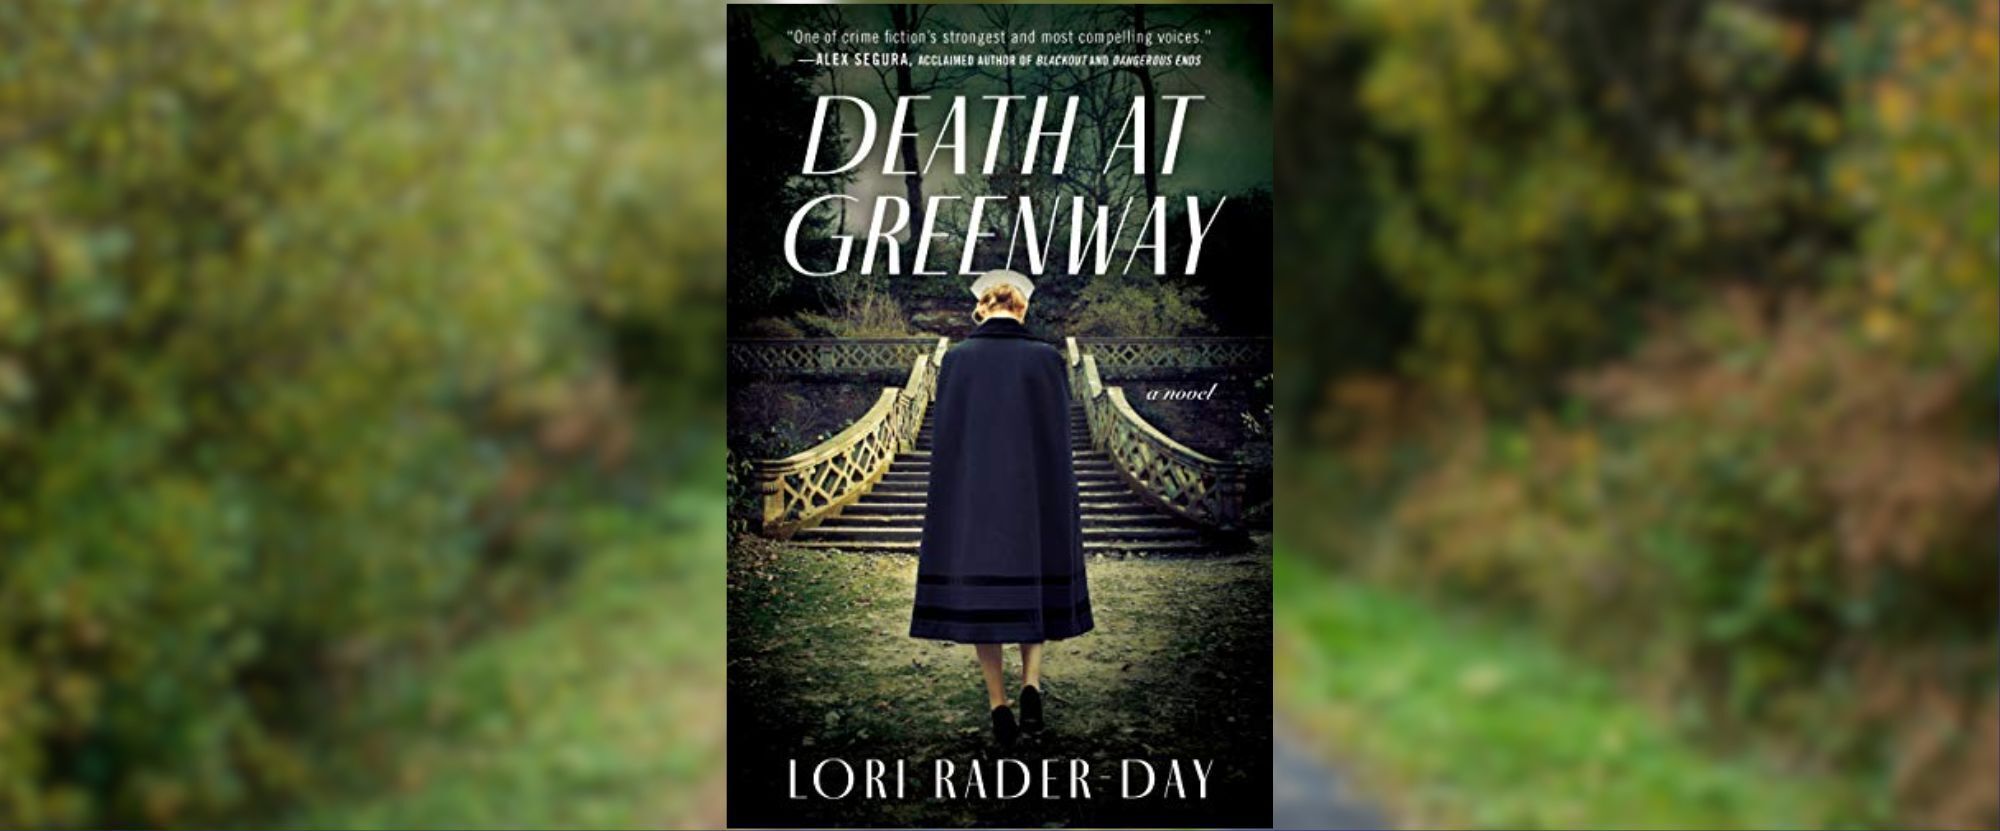 Jewish Federation Book Club Reads Death at Greenway by Lori Rader-Day